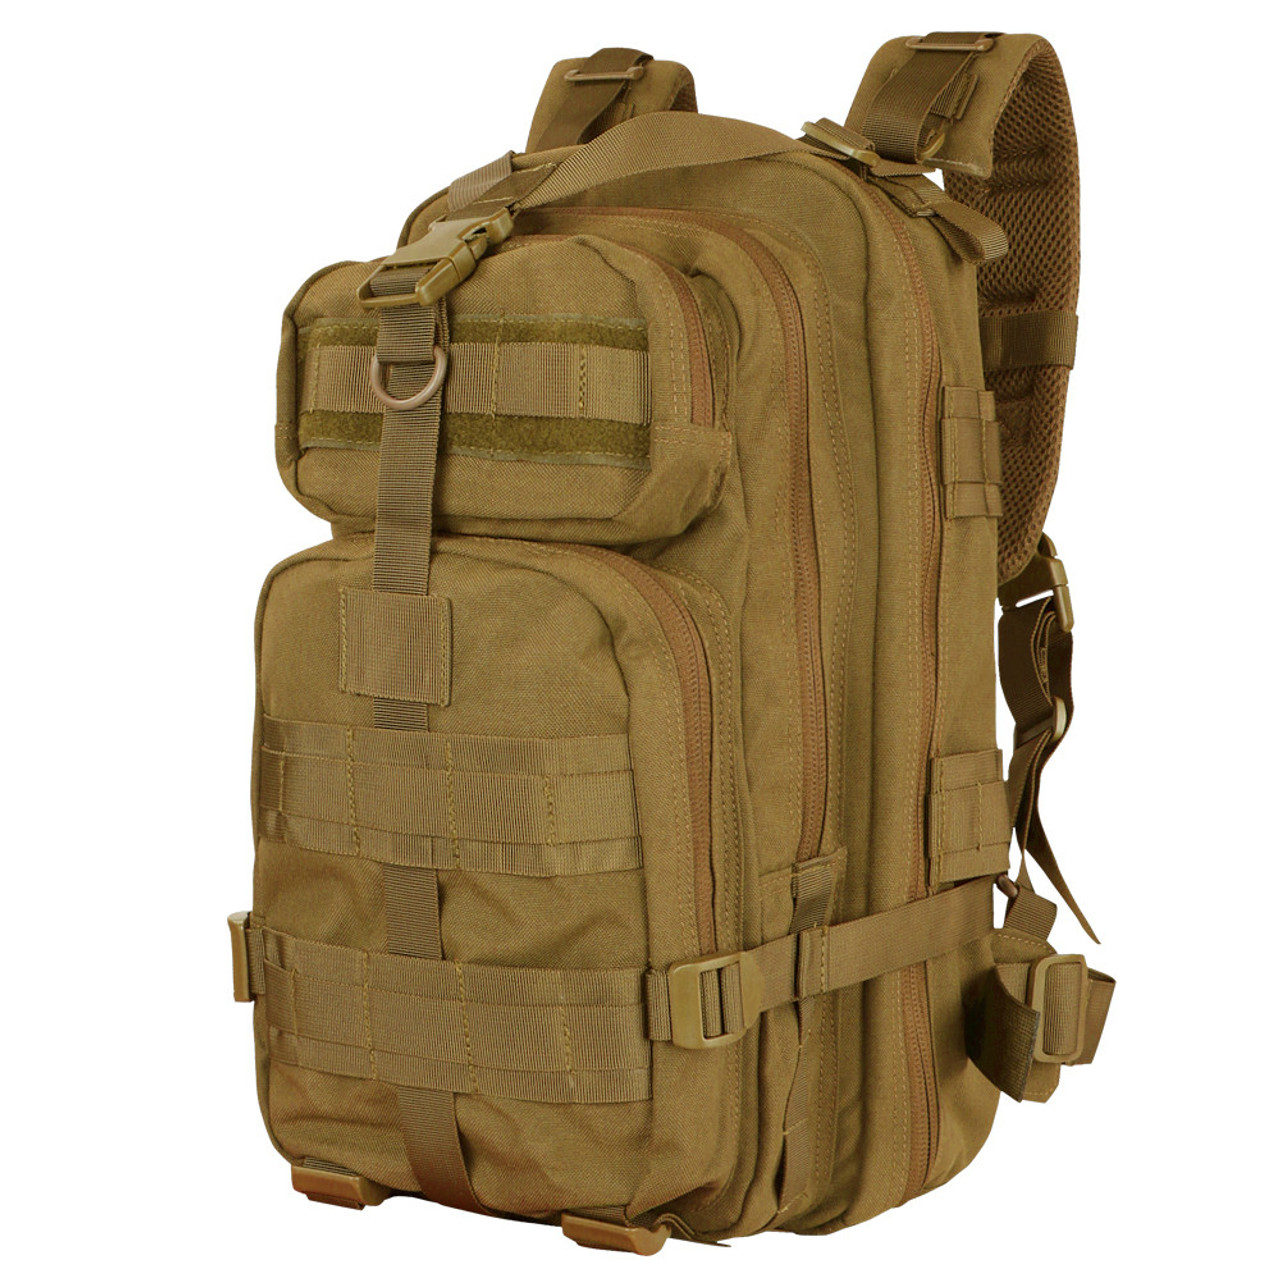 Best Concealed Carry Backpack